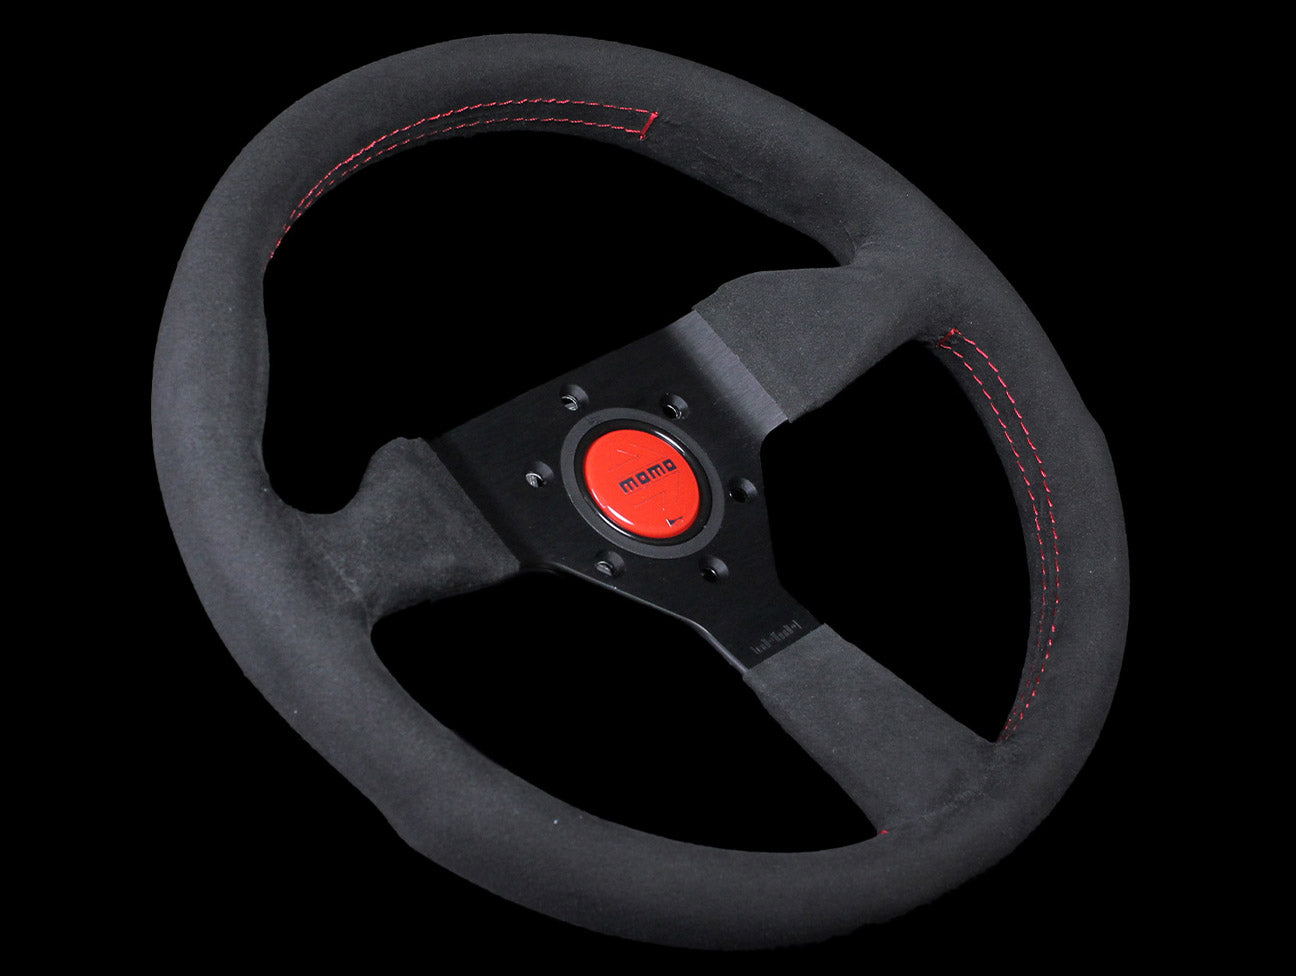 Momo Monte Carlo Steering Wheel - 320mm Black Alcantara Suede w/ Red Stitching